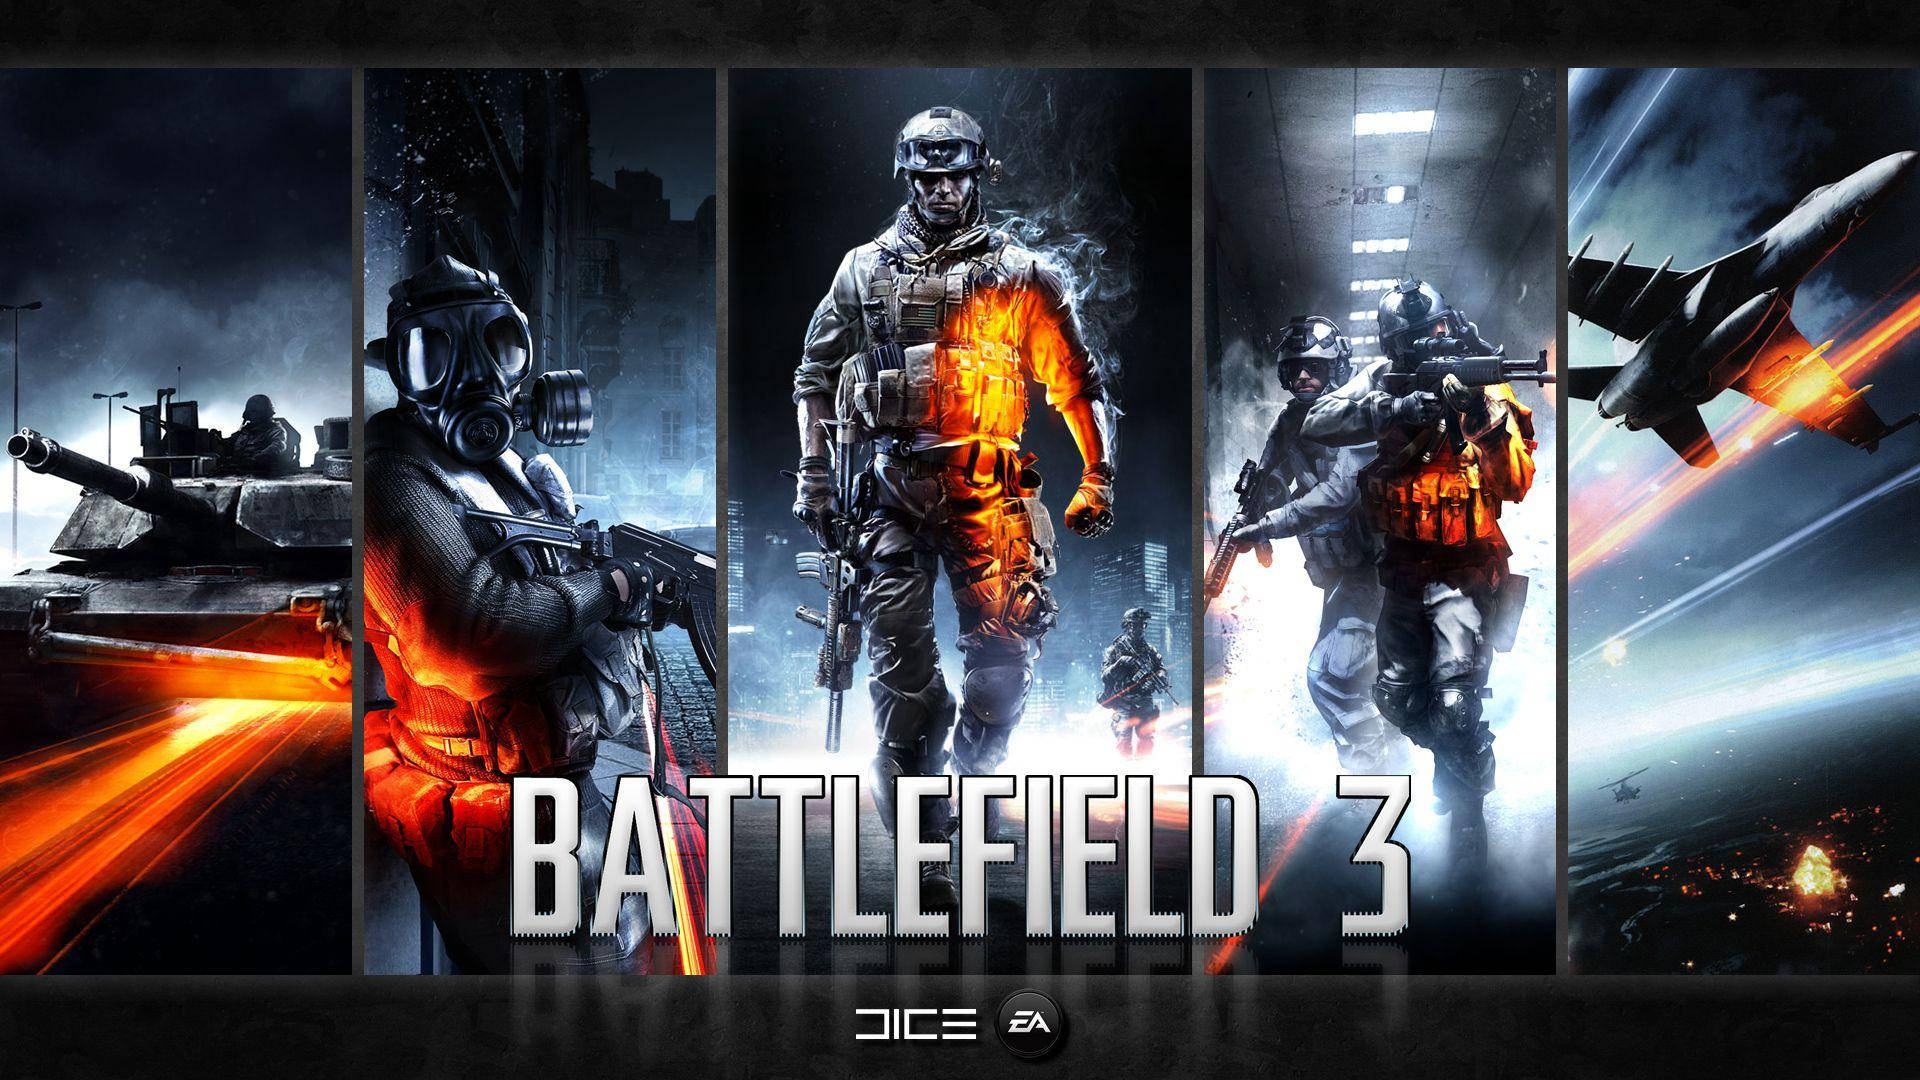 Gaming Poster Battlefield 3 Wallpaper